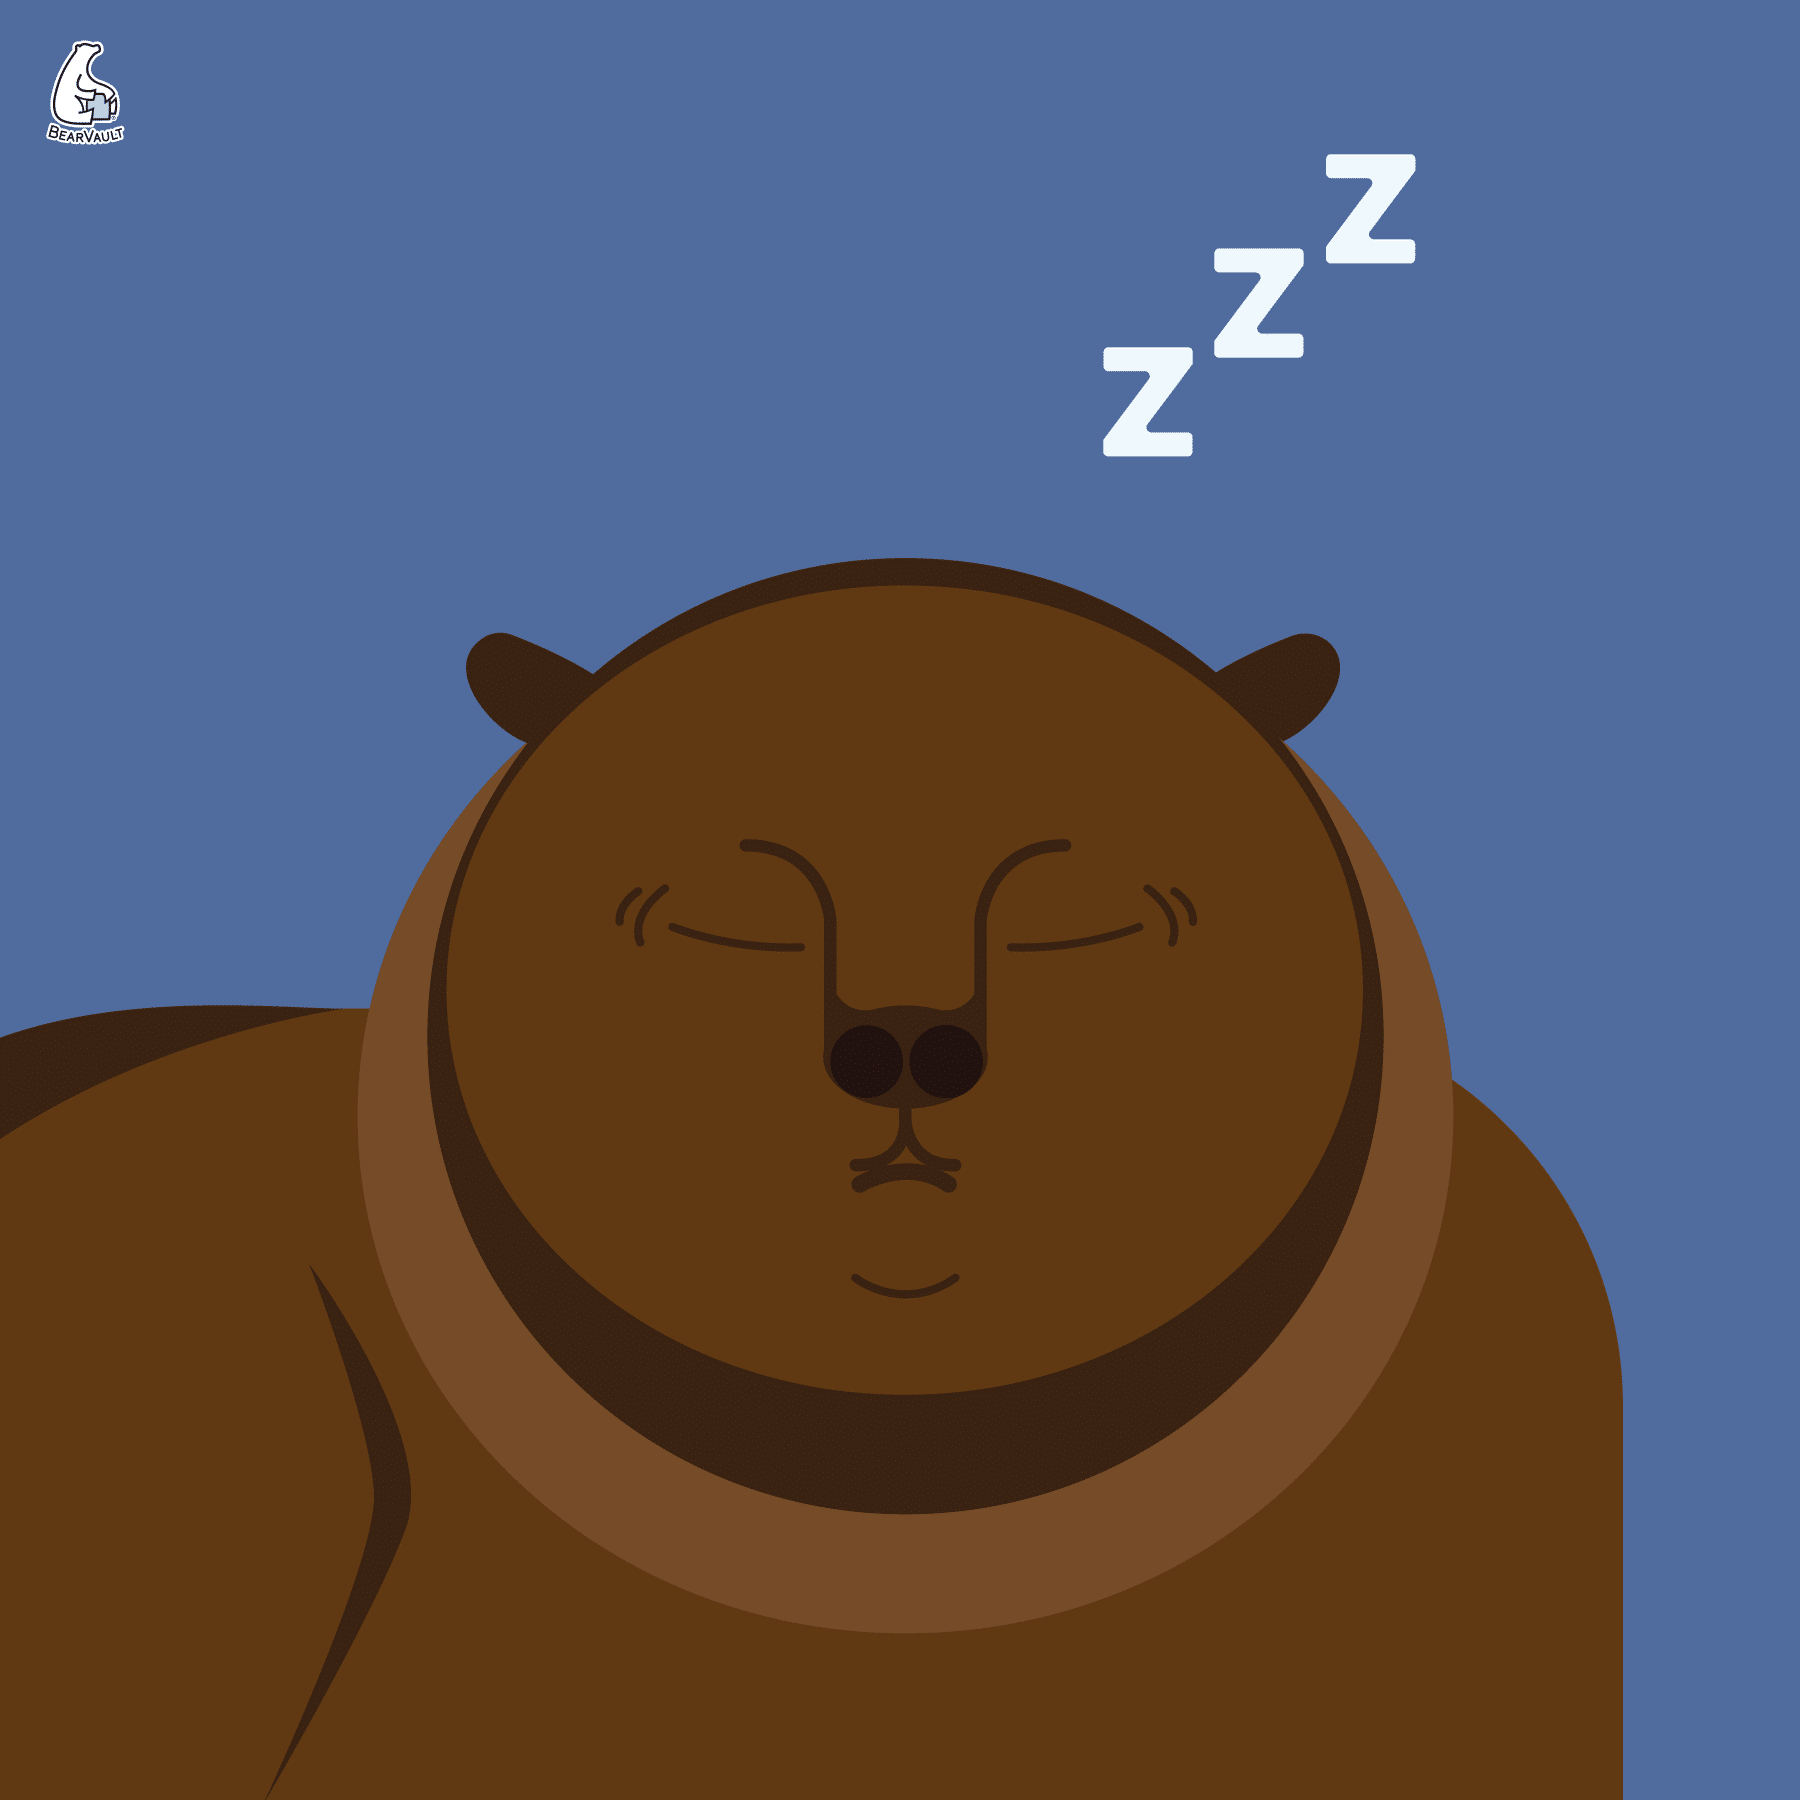 An illustration of a sleeping bear.